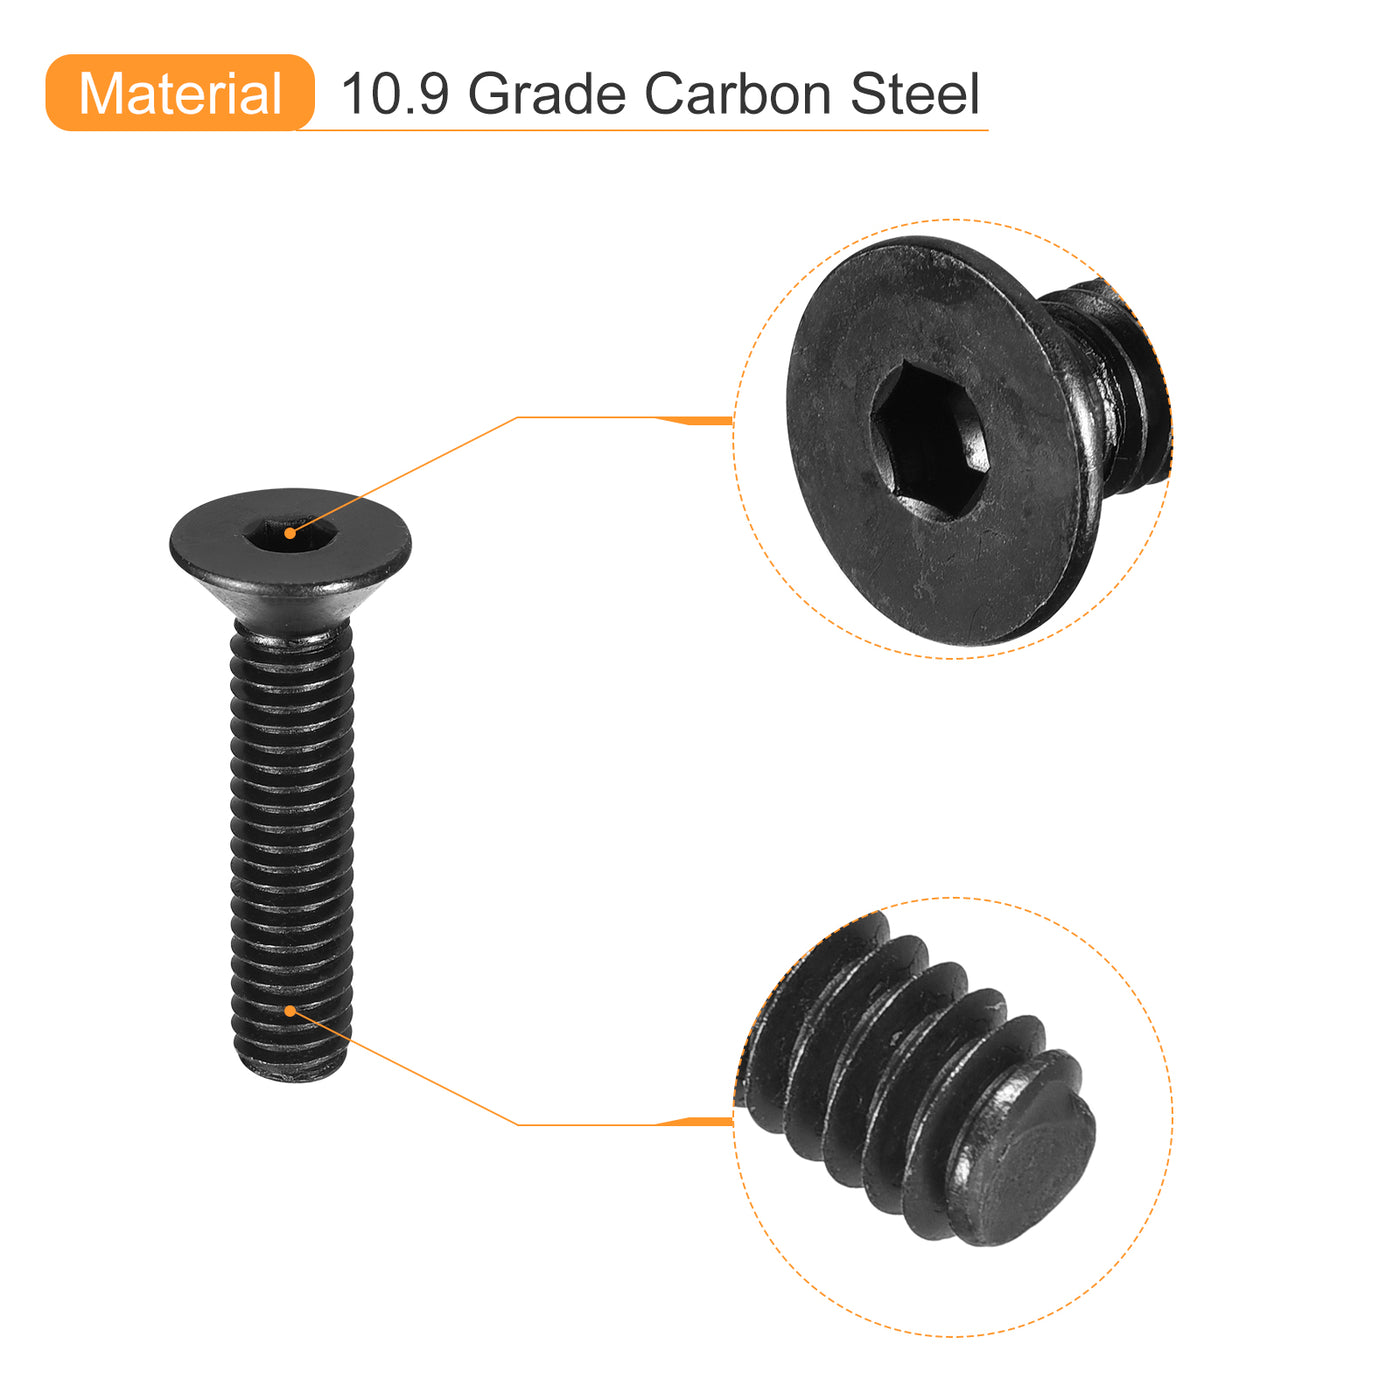 uxcell Uxcell 5/16-18x1-1/2" Flat Head Socket Cap Screws, 10.9 Grade Carbon Steel, 10PCS